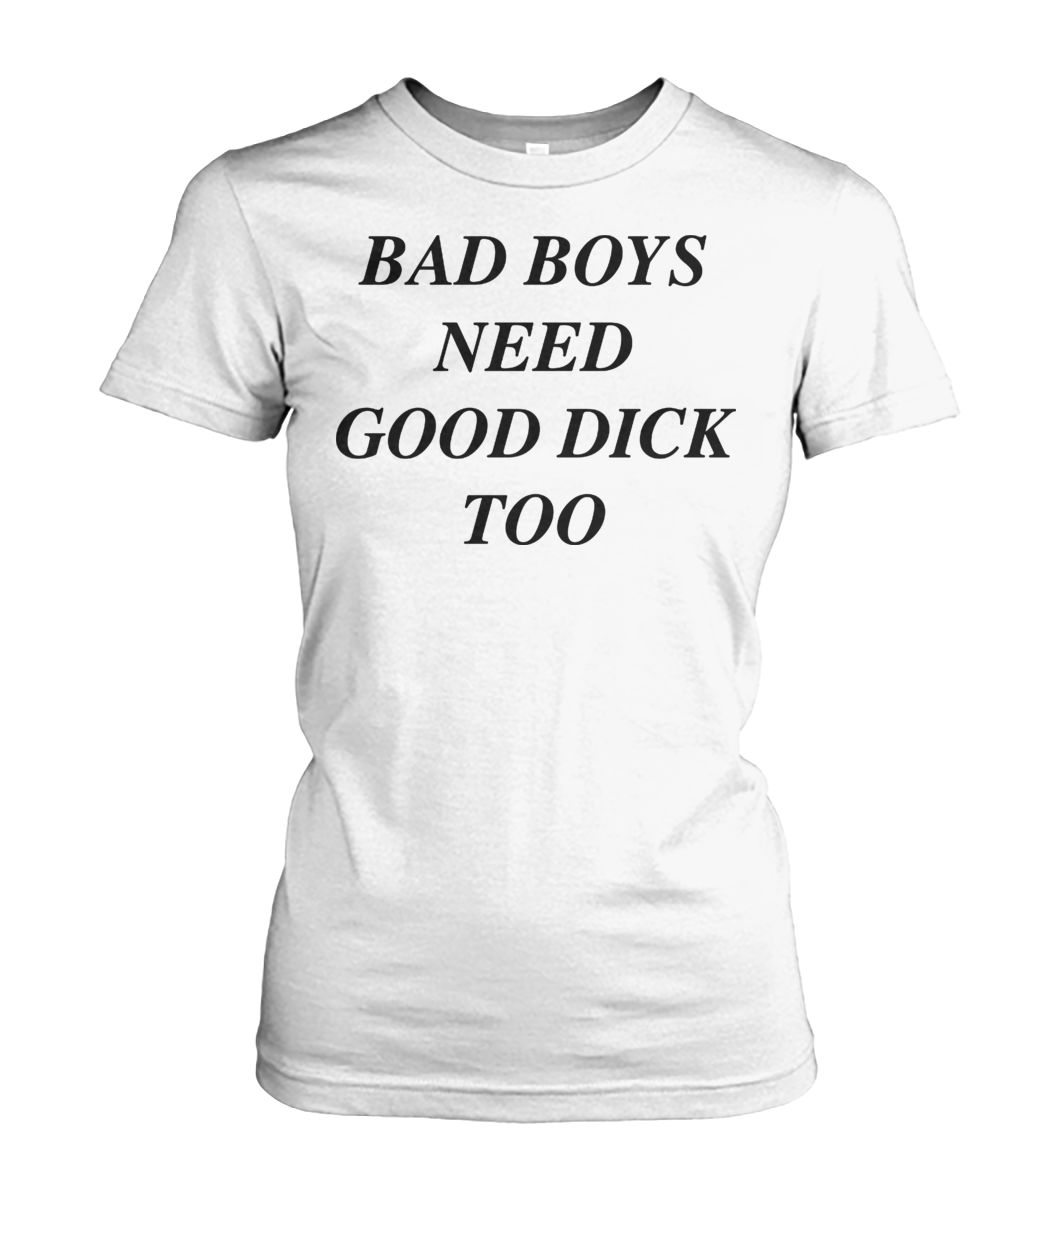 Bad boys need good dick too women's crew tee